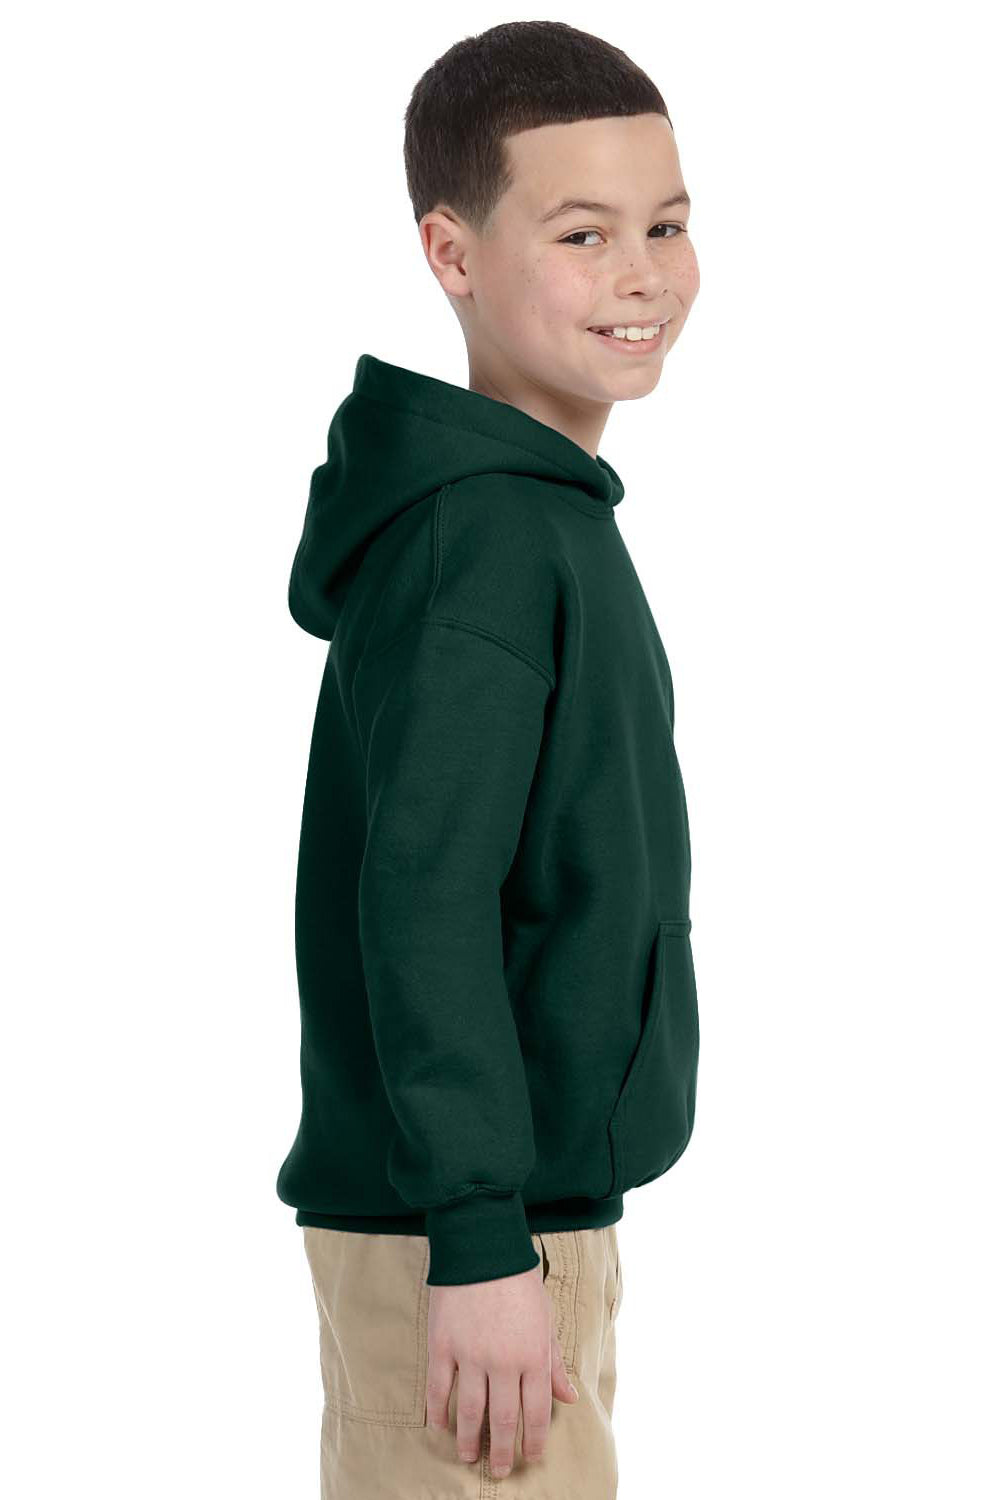 Gildan G185B Youth Hooded Sweatshirt Hoodie Forest Green Side